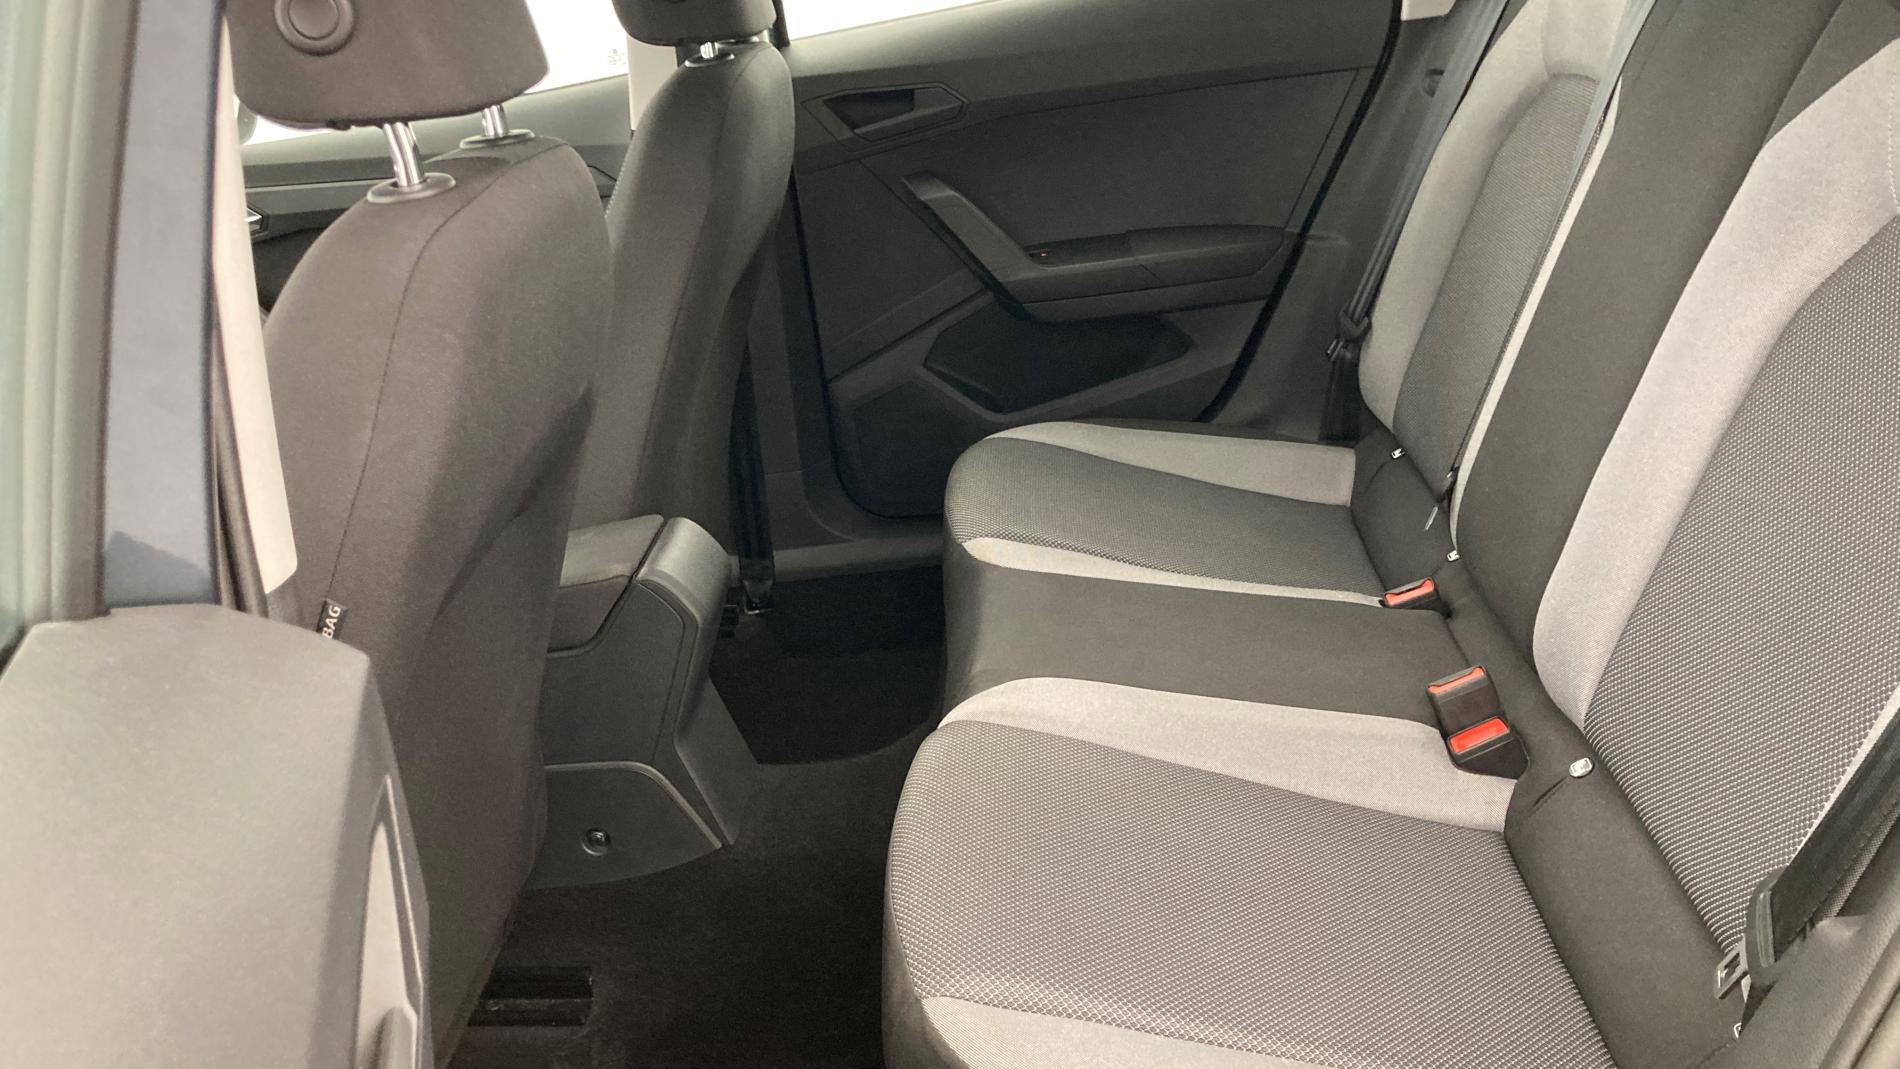 seat ibiza style 1.0 MPI 80 2019 gris magnetic 14